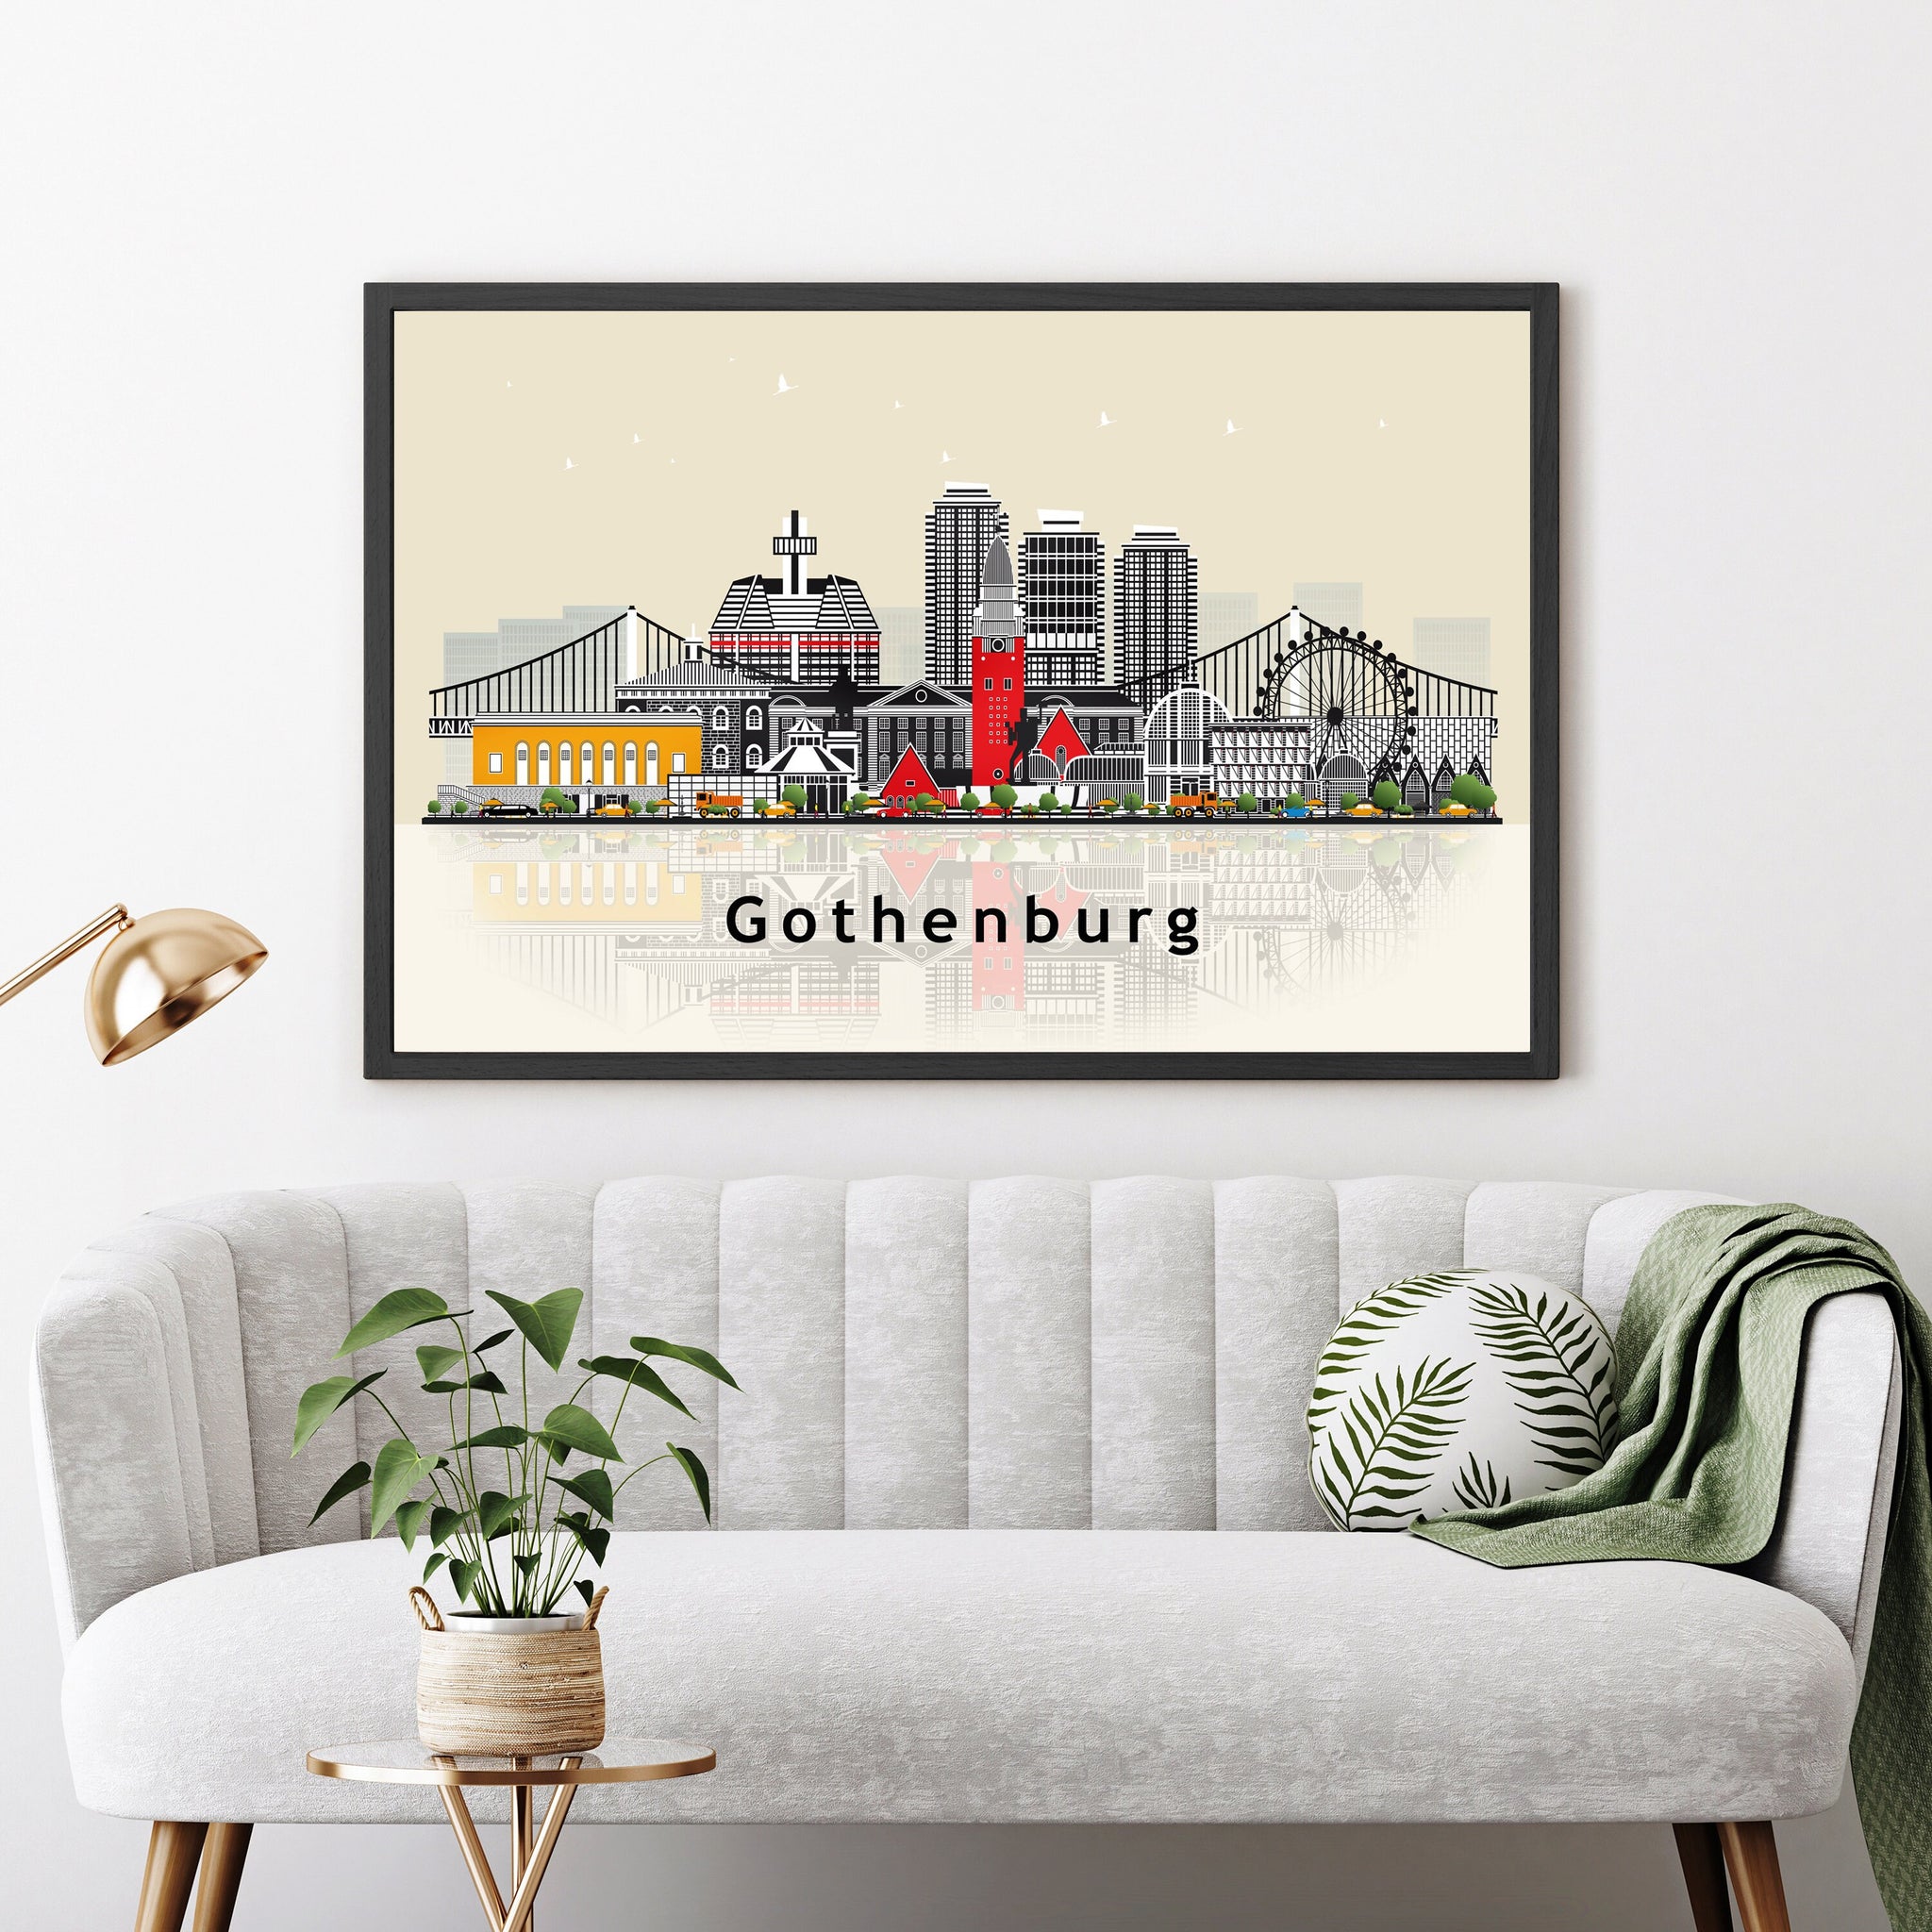 GOTHENBURG SWEDEN Illustration skyline poster, Modern skyline cityscape poster print, Sweden landmark map poster, Home wall decoration